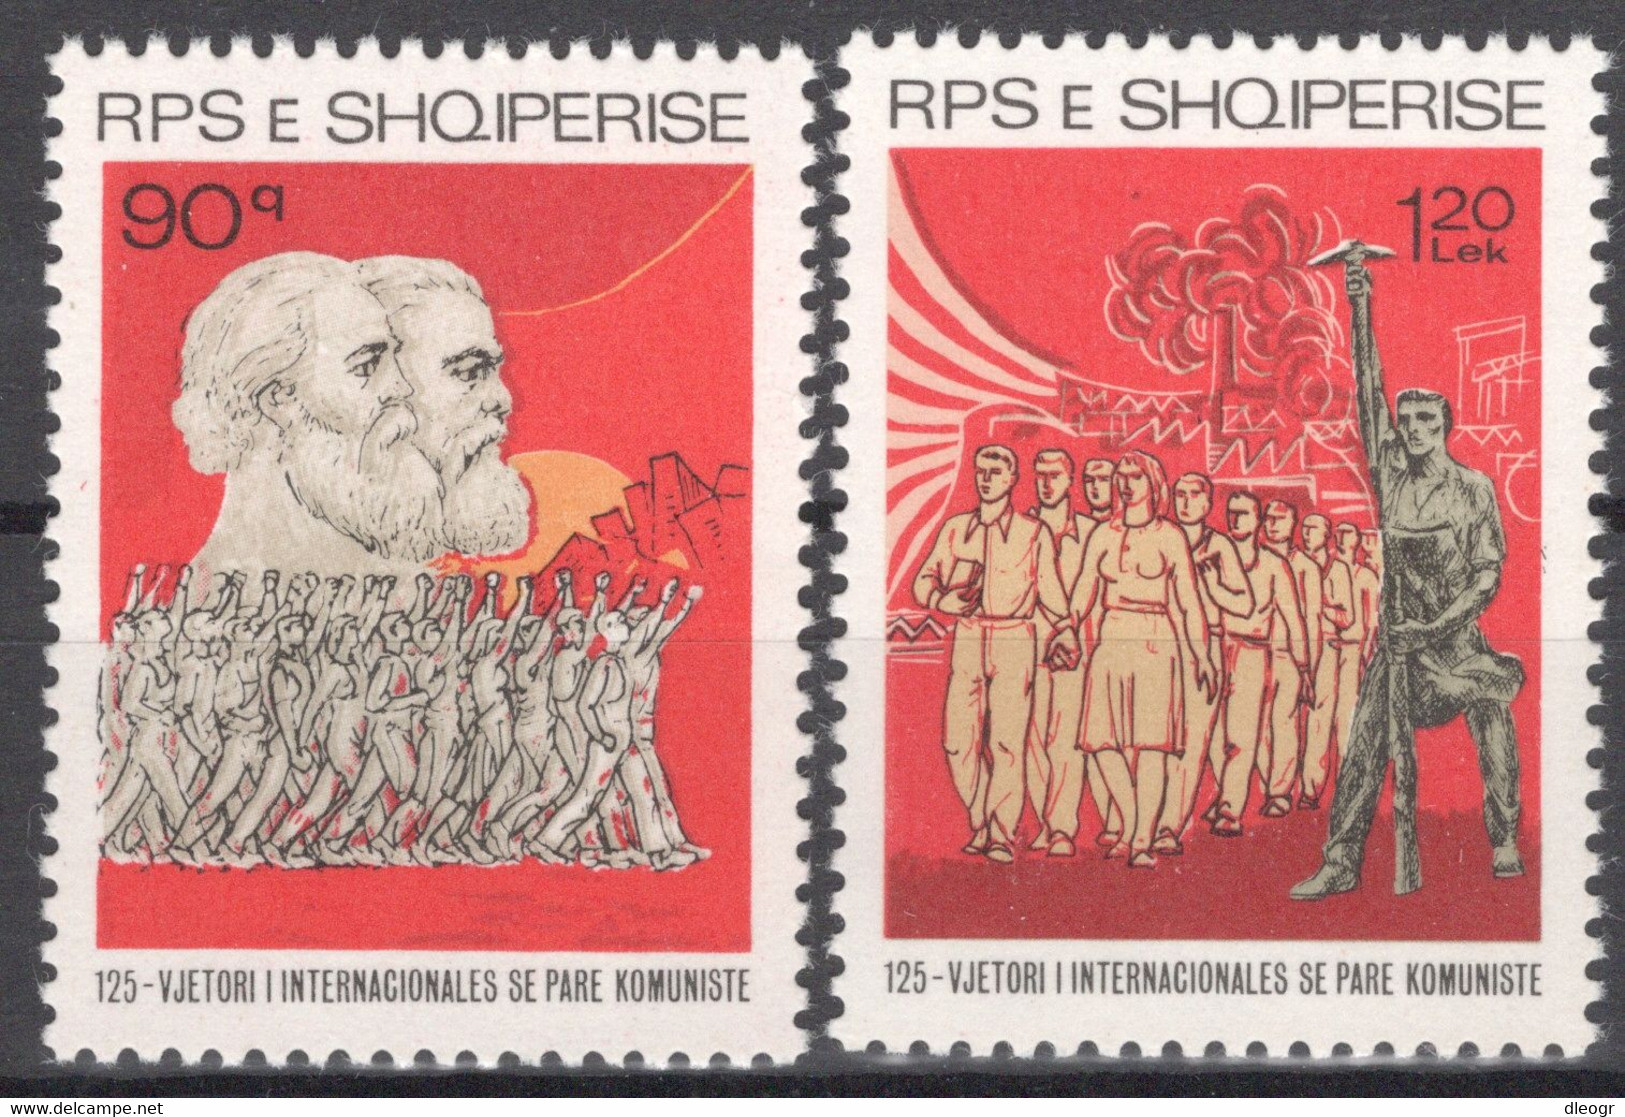 Albania 1989 First Communist International, 125th Anniv MNH VF - Albania